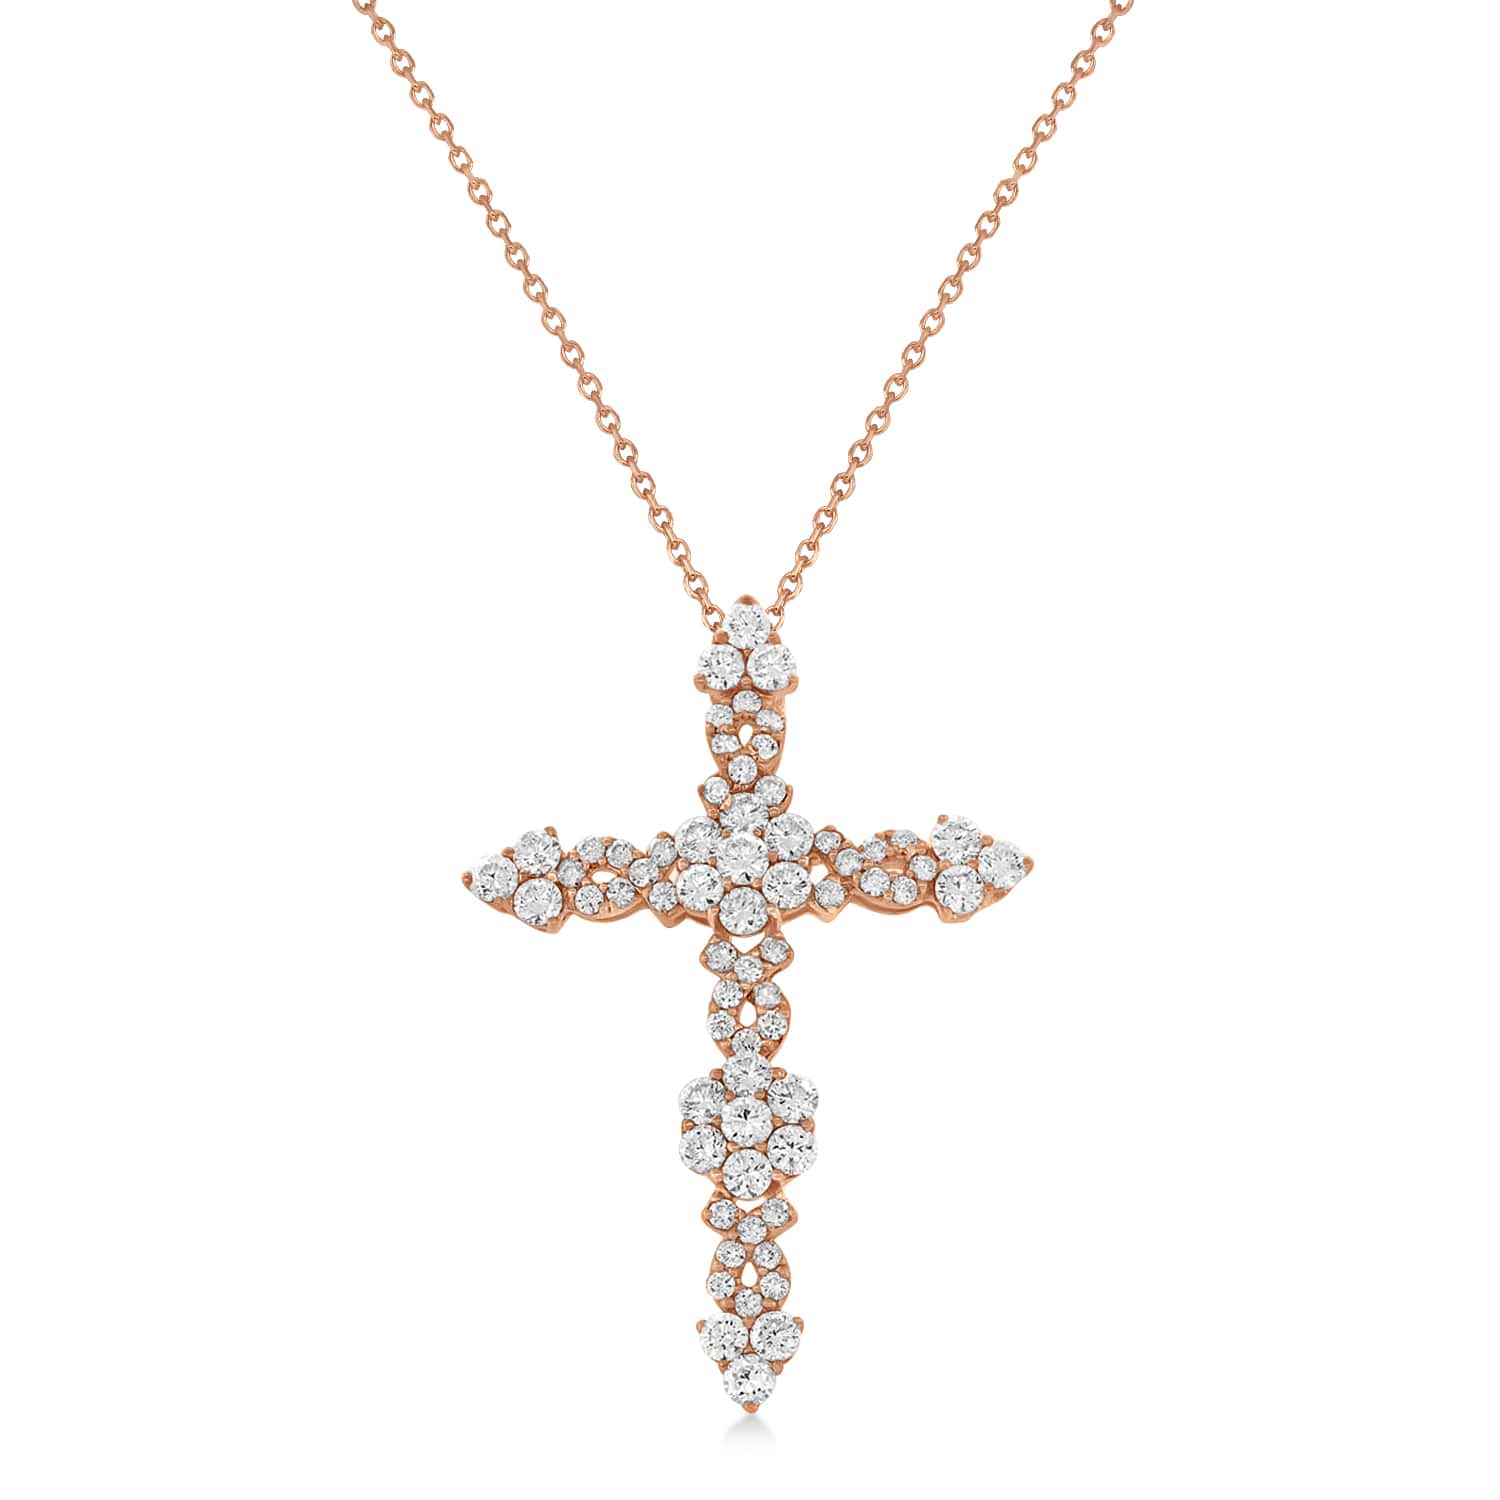 Diamond Cross Pendant Necklace 14k Rose Gold (1.93ct)